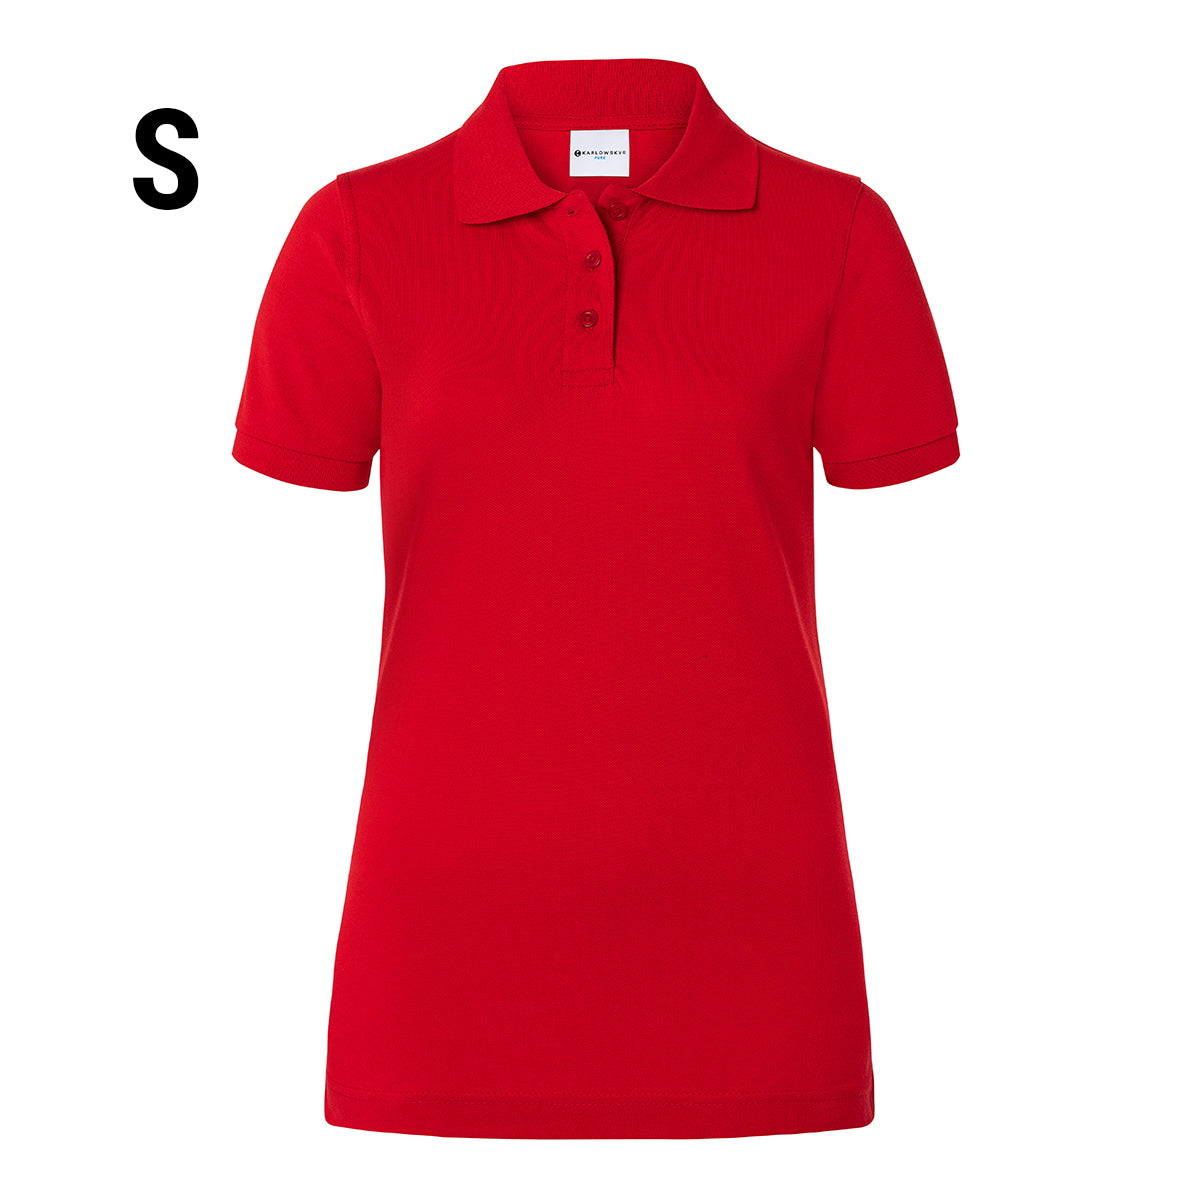 Karlowsky - Arbejdsbeklædning Basic Poloshirt til damer - Rød - Størrelse: S